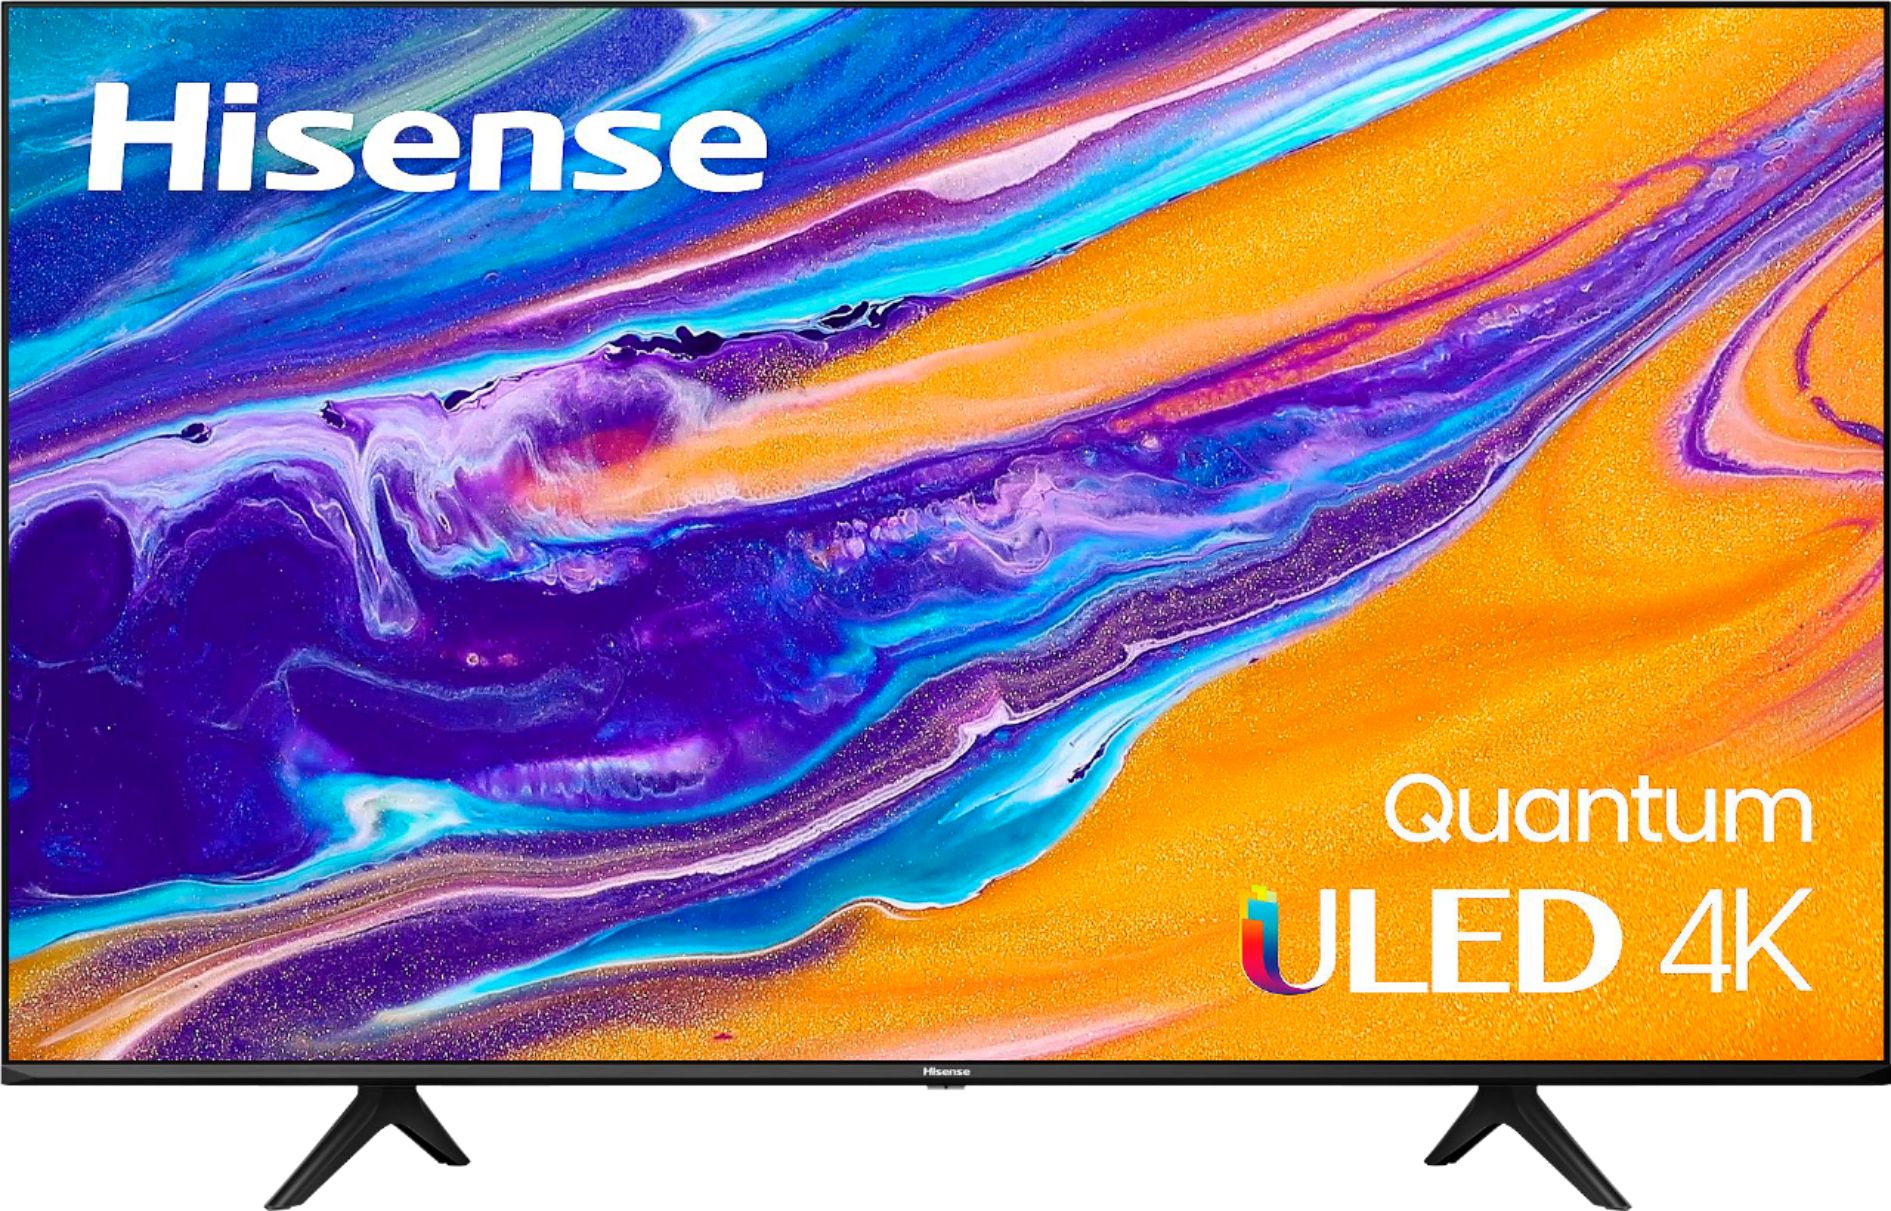 75" Hisense U6G Series Quantum ULED 4K UHD Smart Android HDTV $999